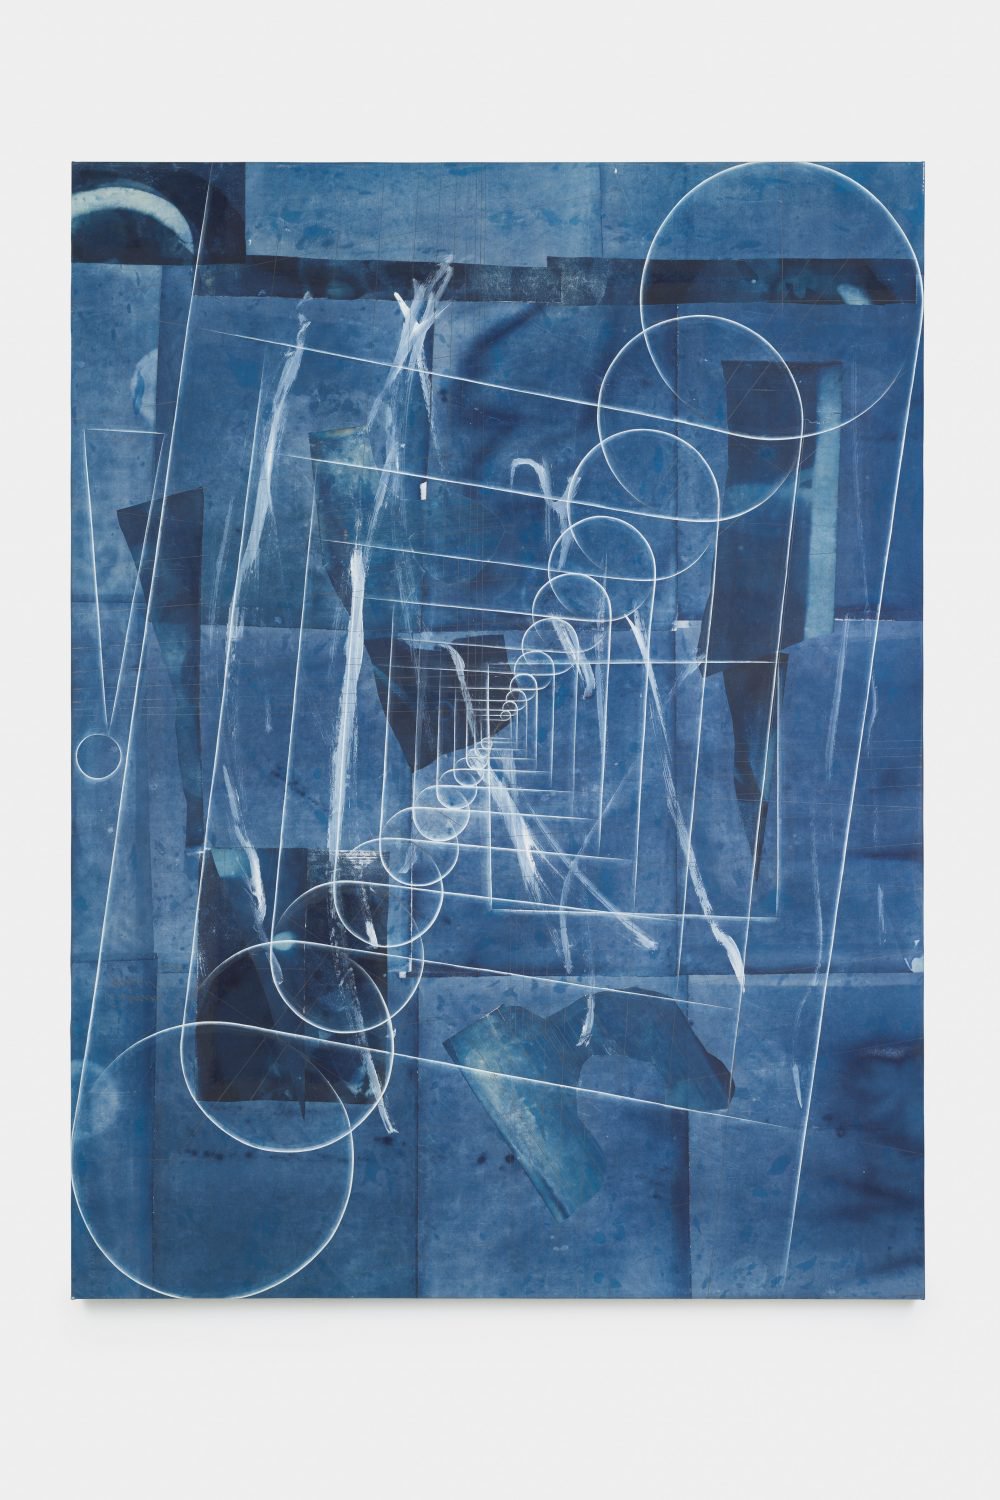 Tillman KaiserUntitled, 2018Photogram on paper on canvas200 x 150 cm